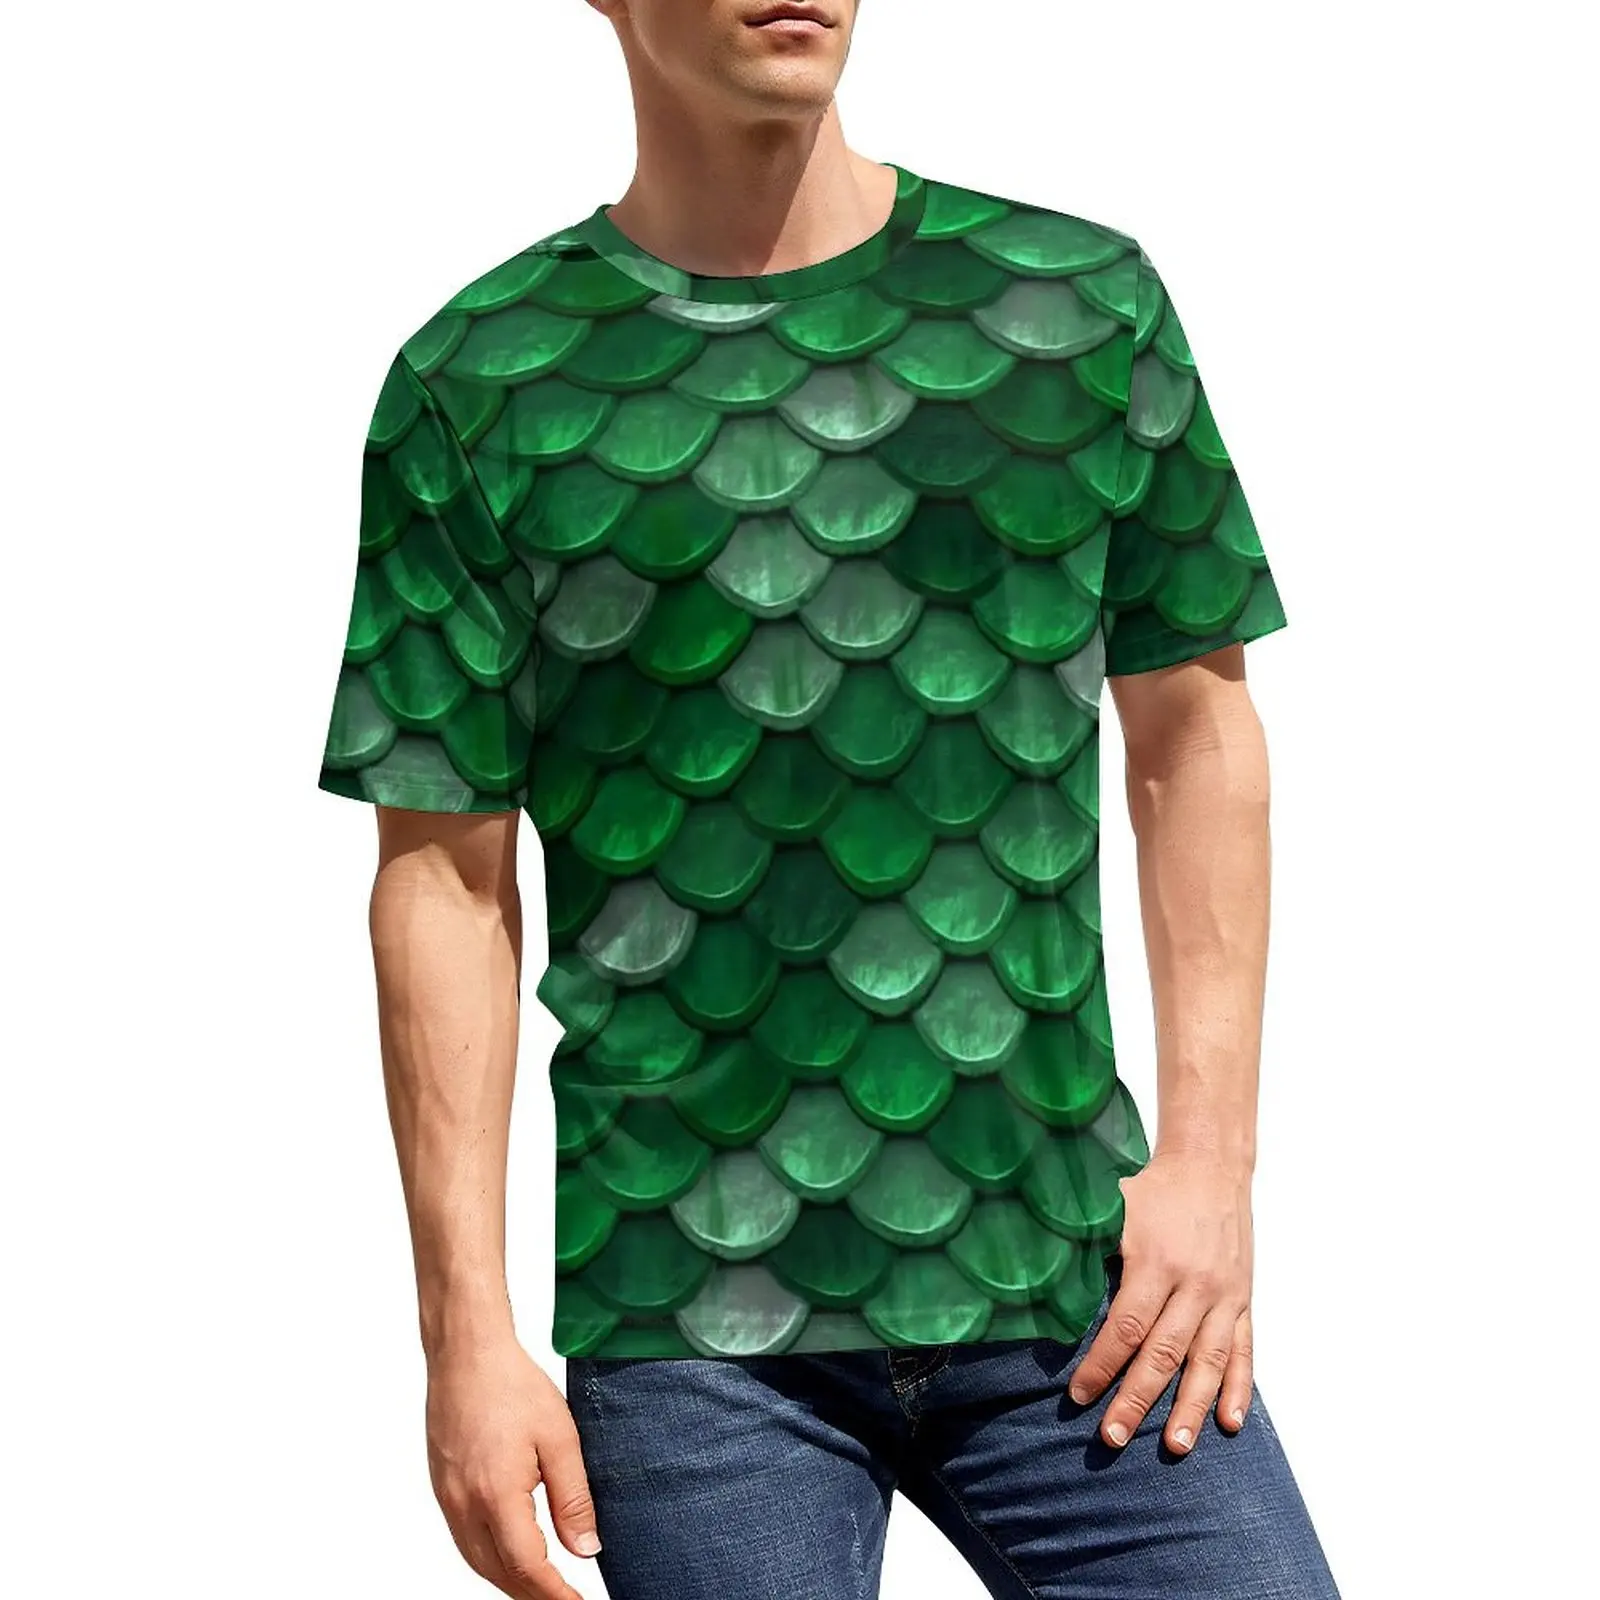 Green Mermaids T-Shirt Fish Scales Print Men Novelty T Shirts Original Graphic Tee Shirt Short-Sleeved Casual Tops Birthday Gift